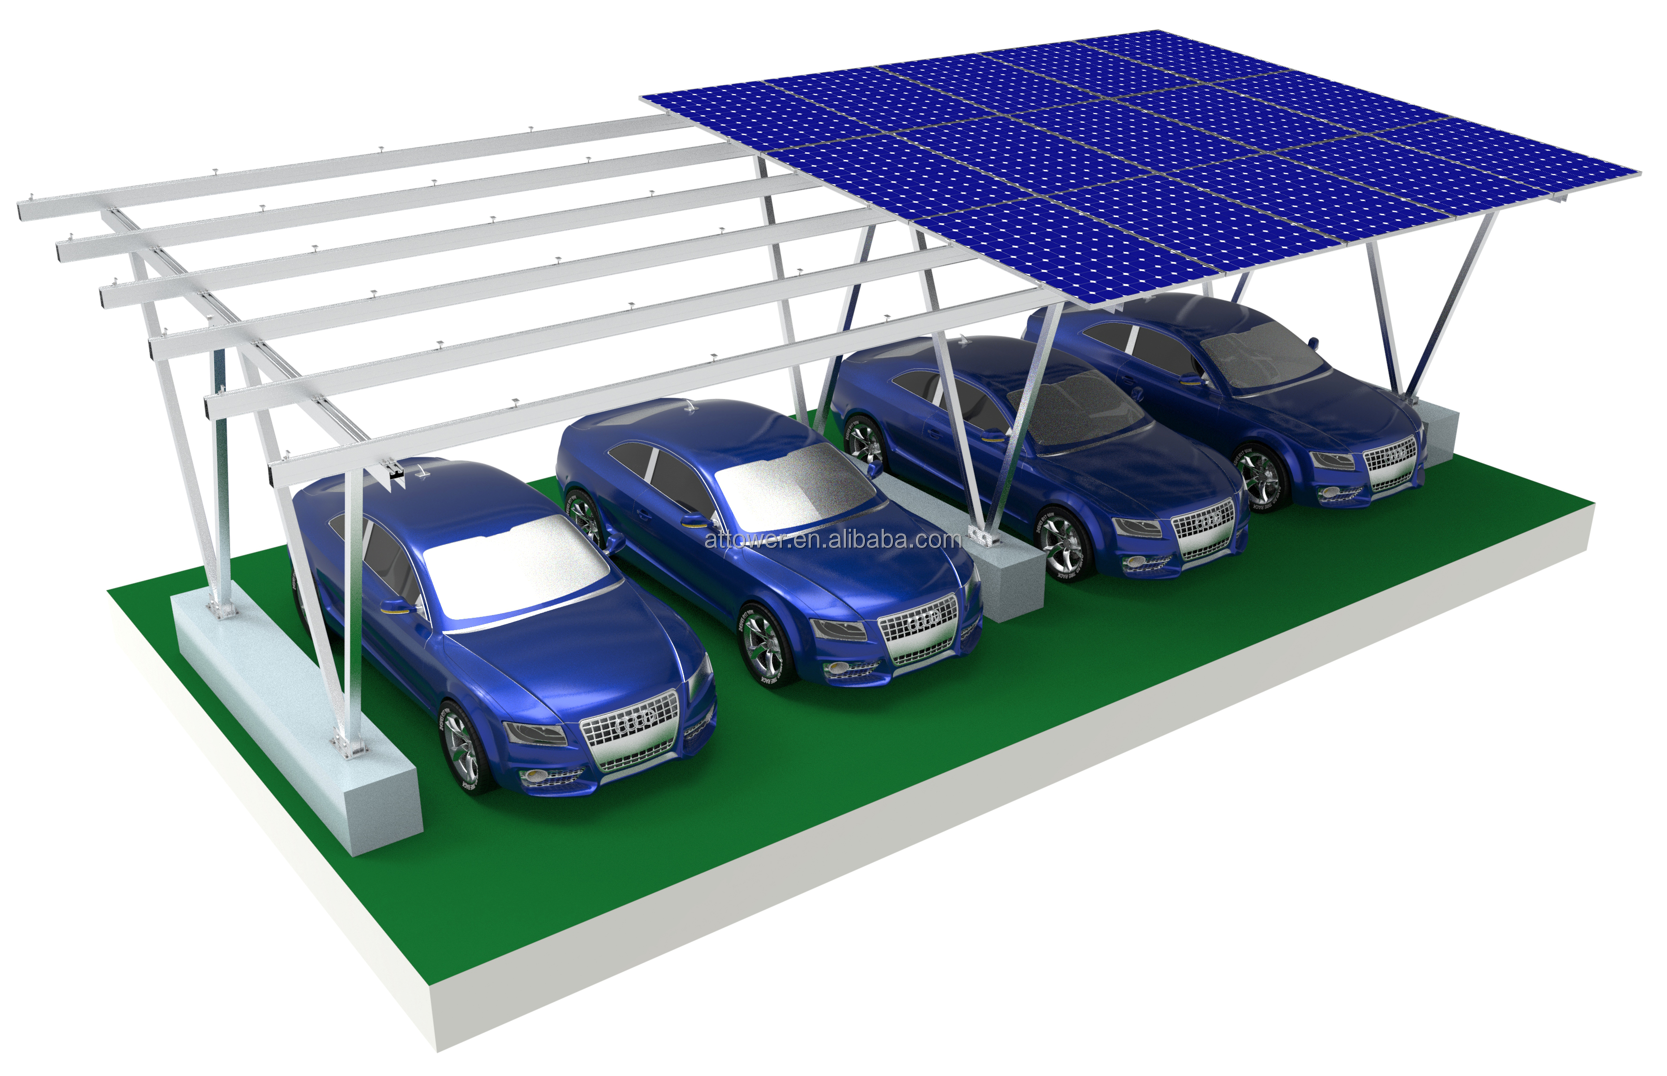 Corrugated Aluminum Metal Roof Solar Panel Mounting Bracket details